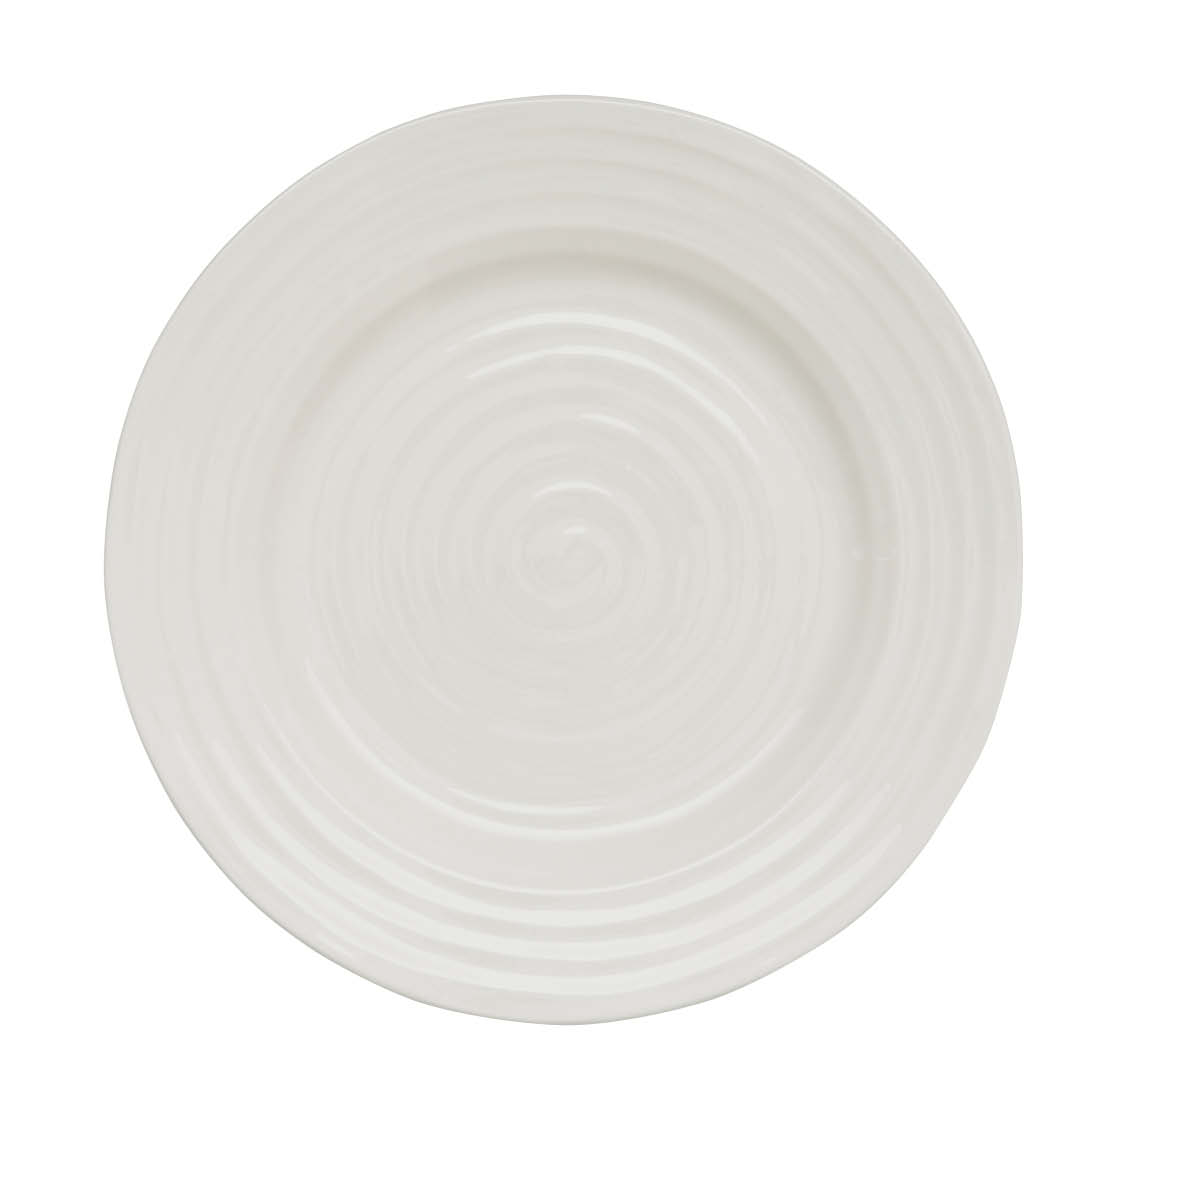 Sophie Conran White Set of 4 Salad Plates image number null